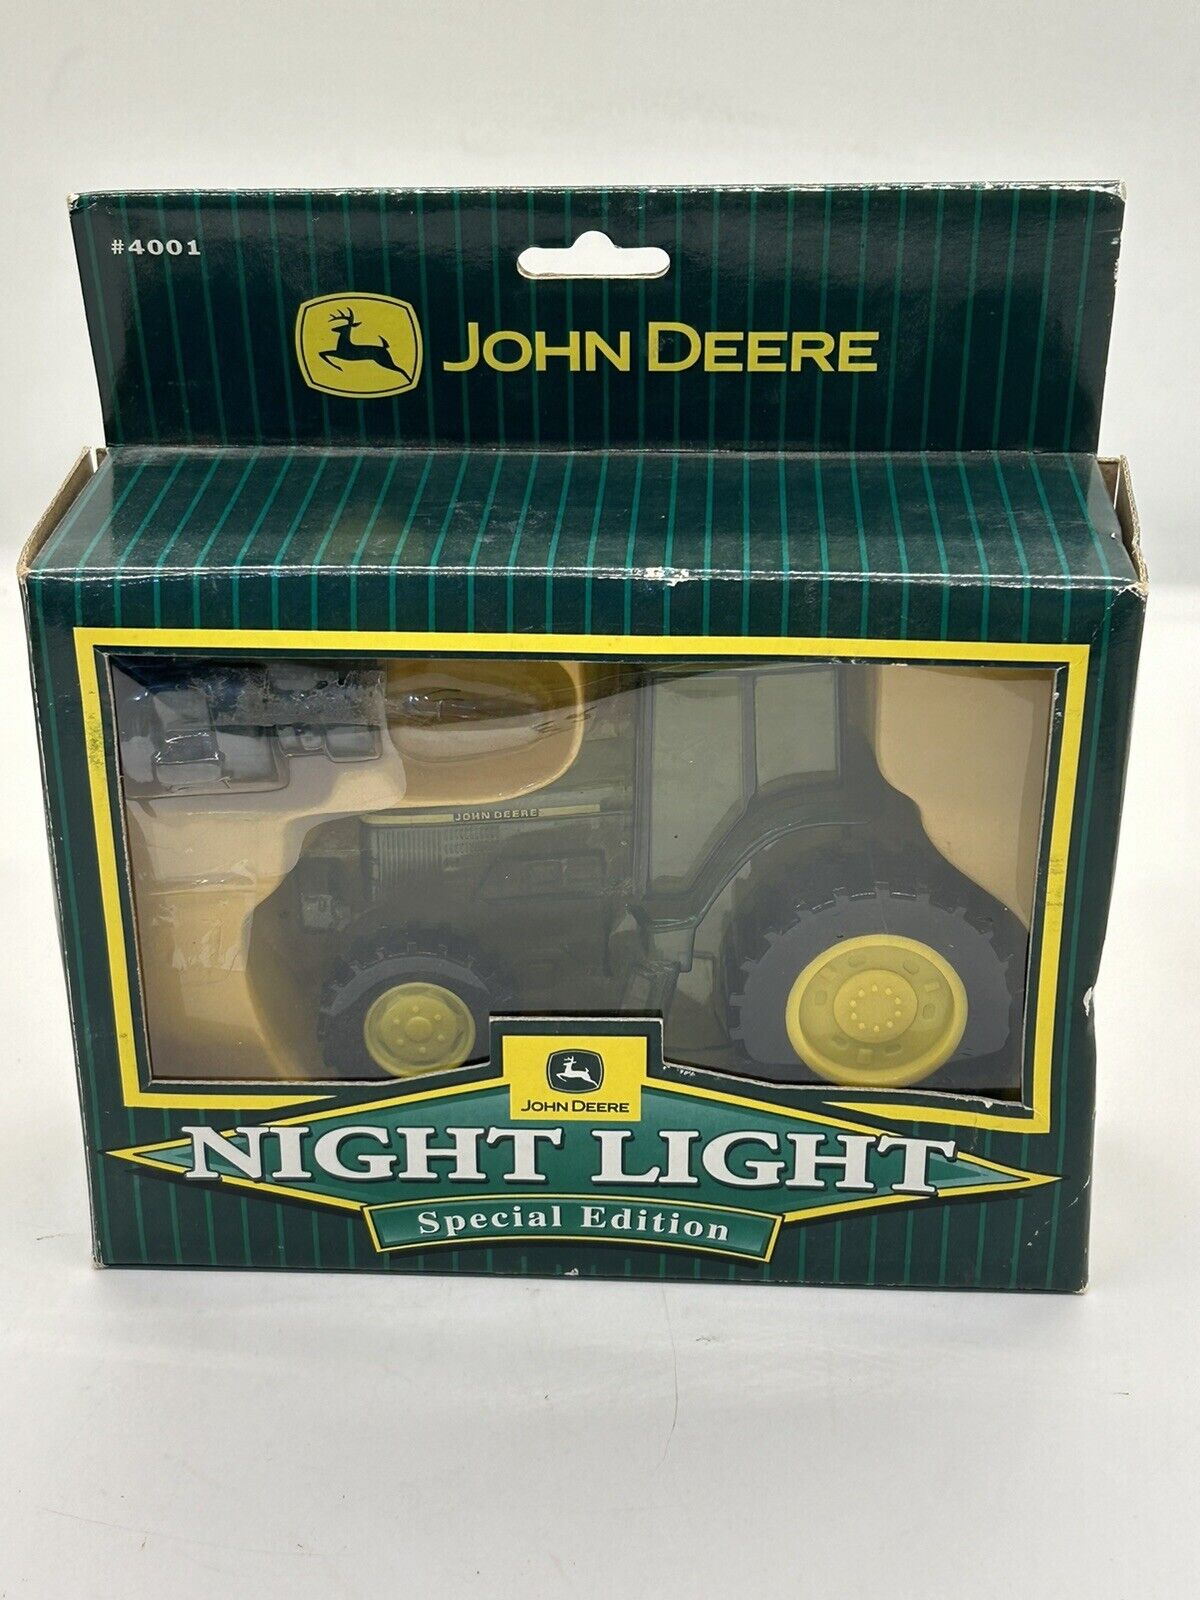 John Deere Tractor Night Light- new- special edition. #4001